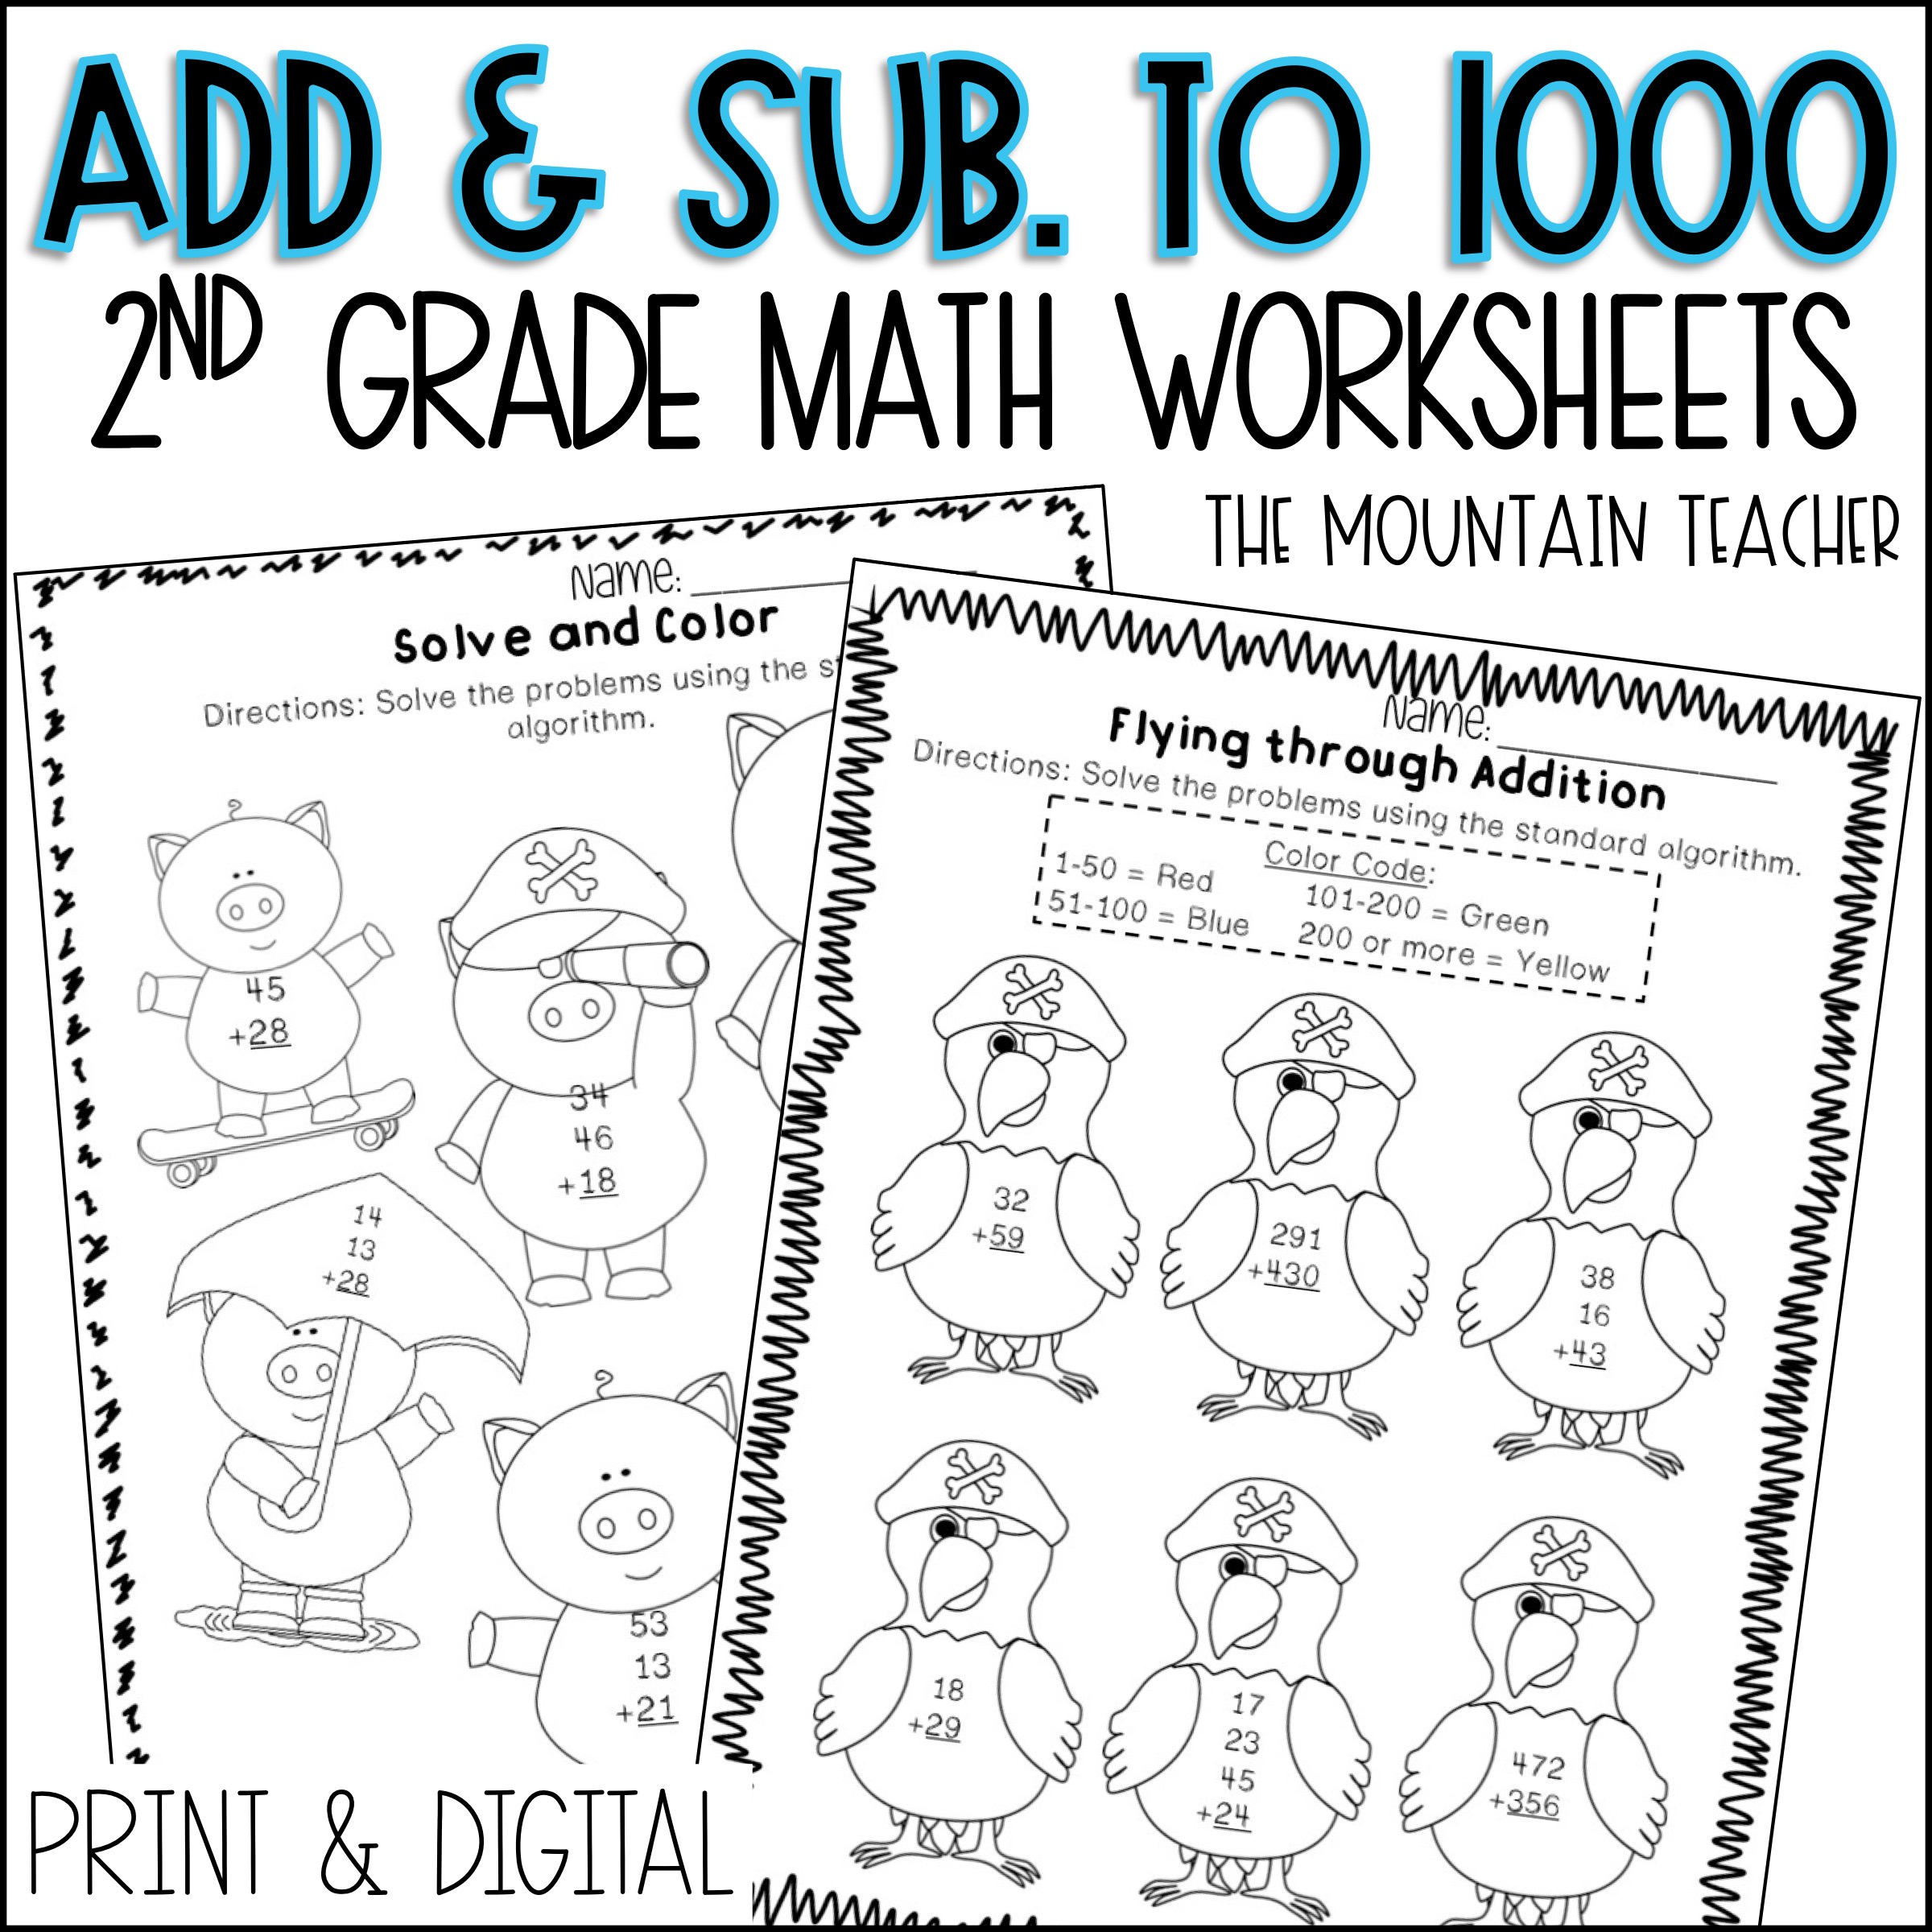 2nd grade math worksheets addition